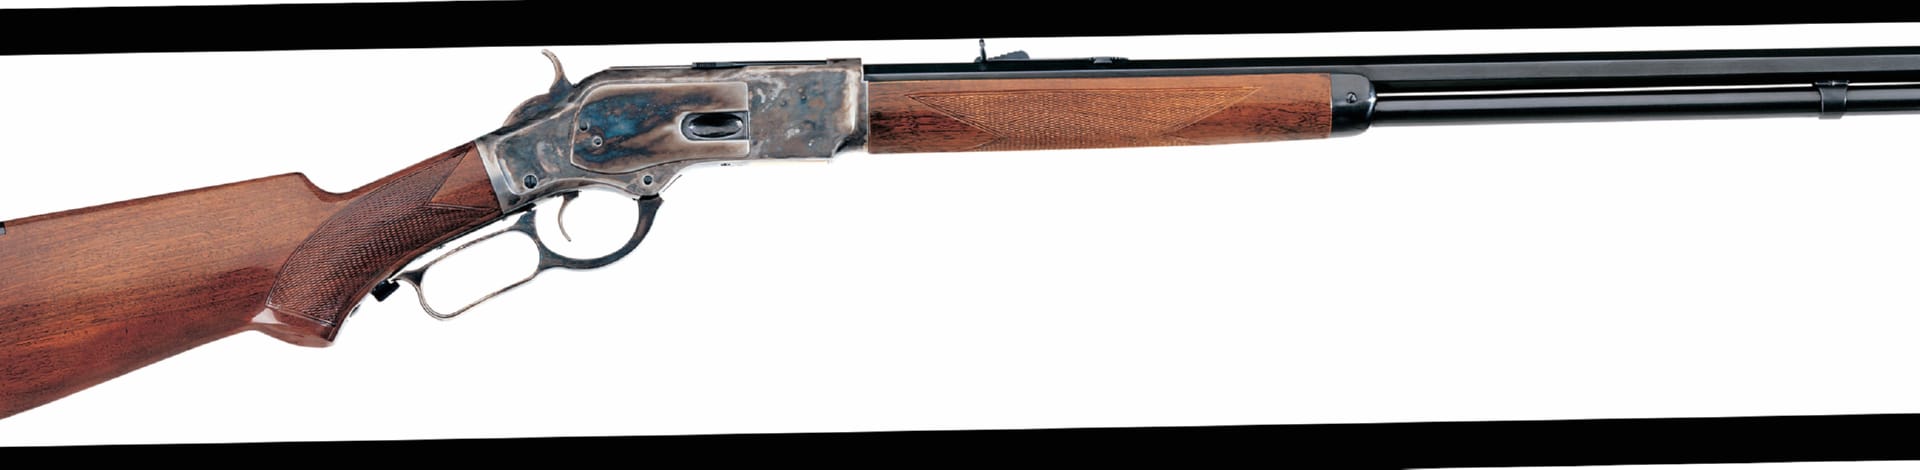 Uberti 1873 Rifle at 1024 x 1024 iPad size wallpapers HD quality